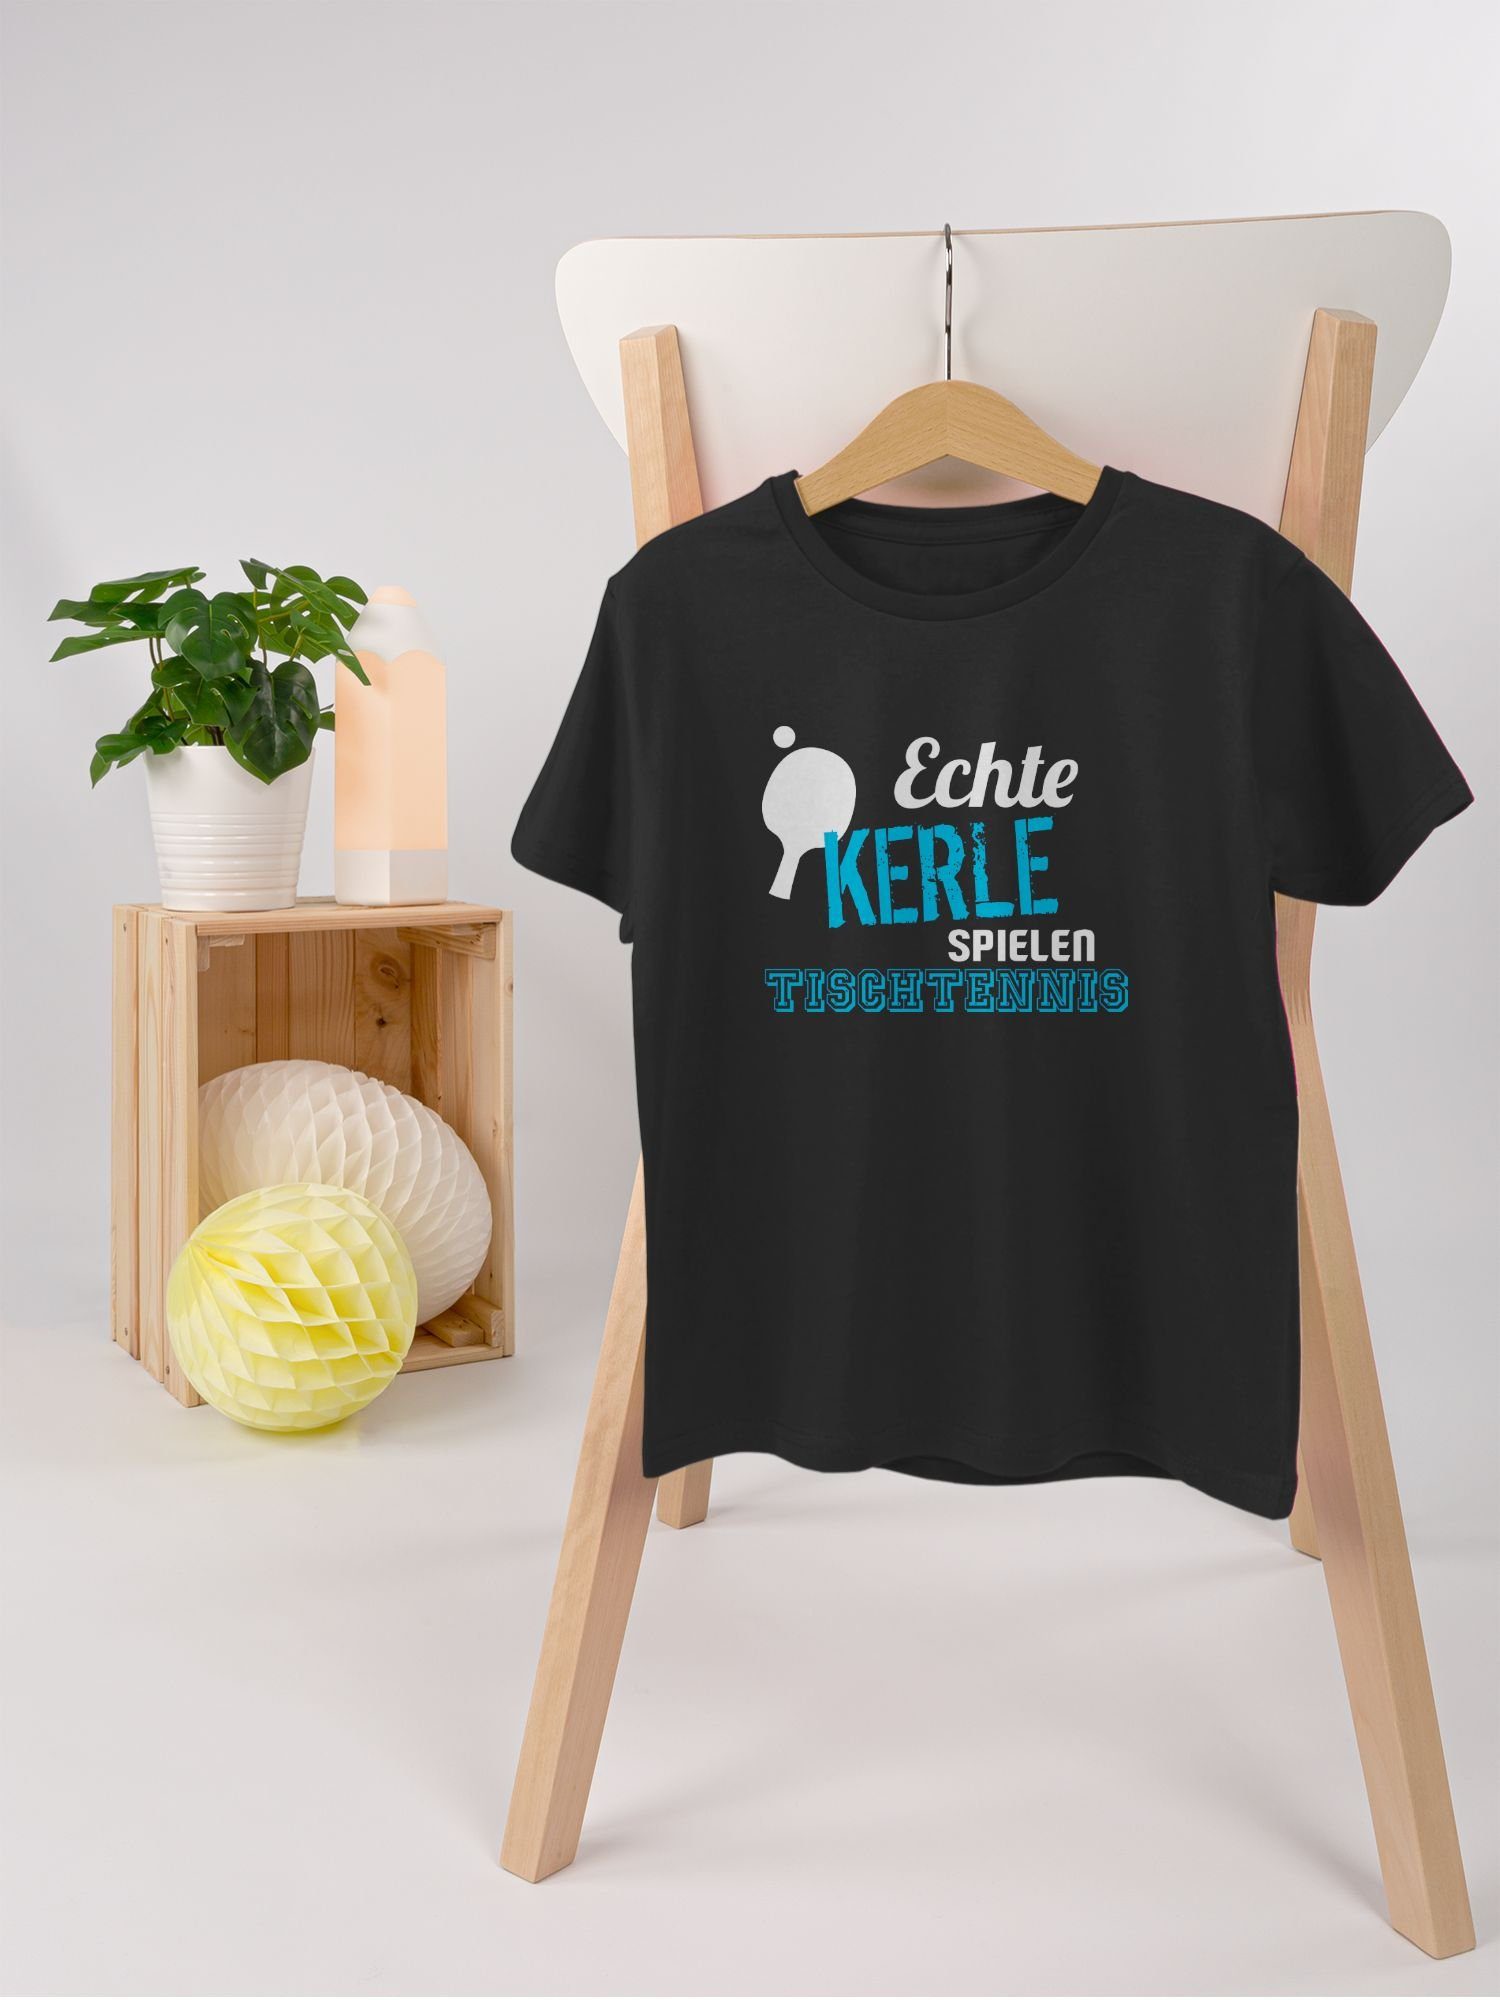 Kleidung Echte Sport Kerle Tischtennis Schwarz T-Shirt Shirtracer Kinder 2 spielen